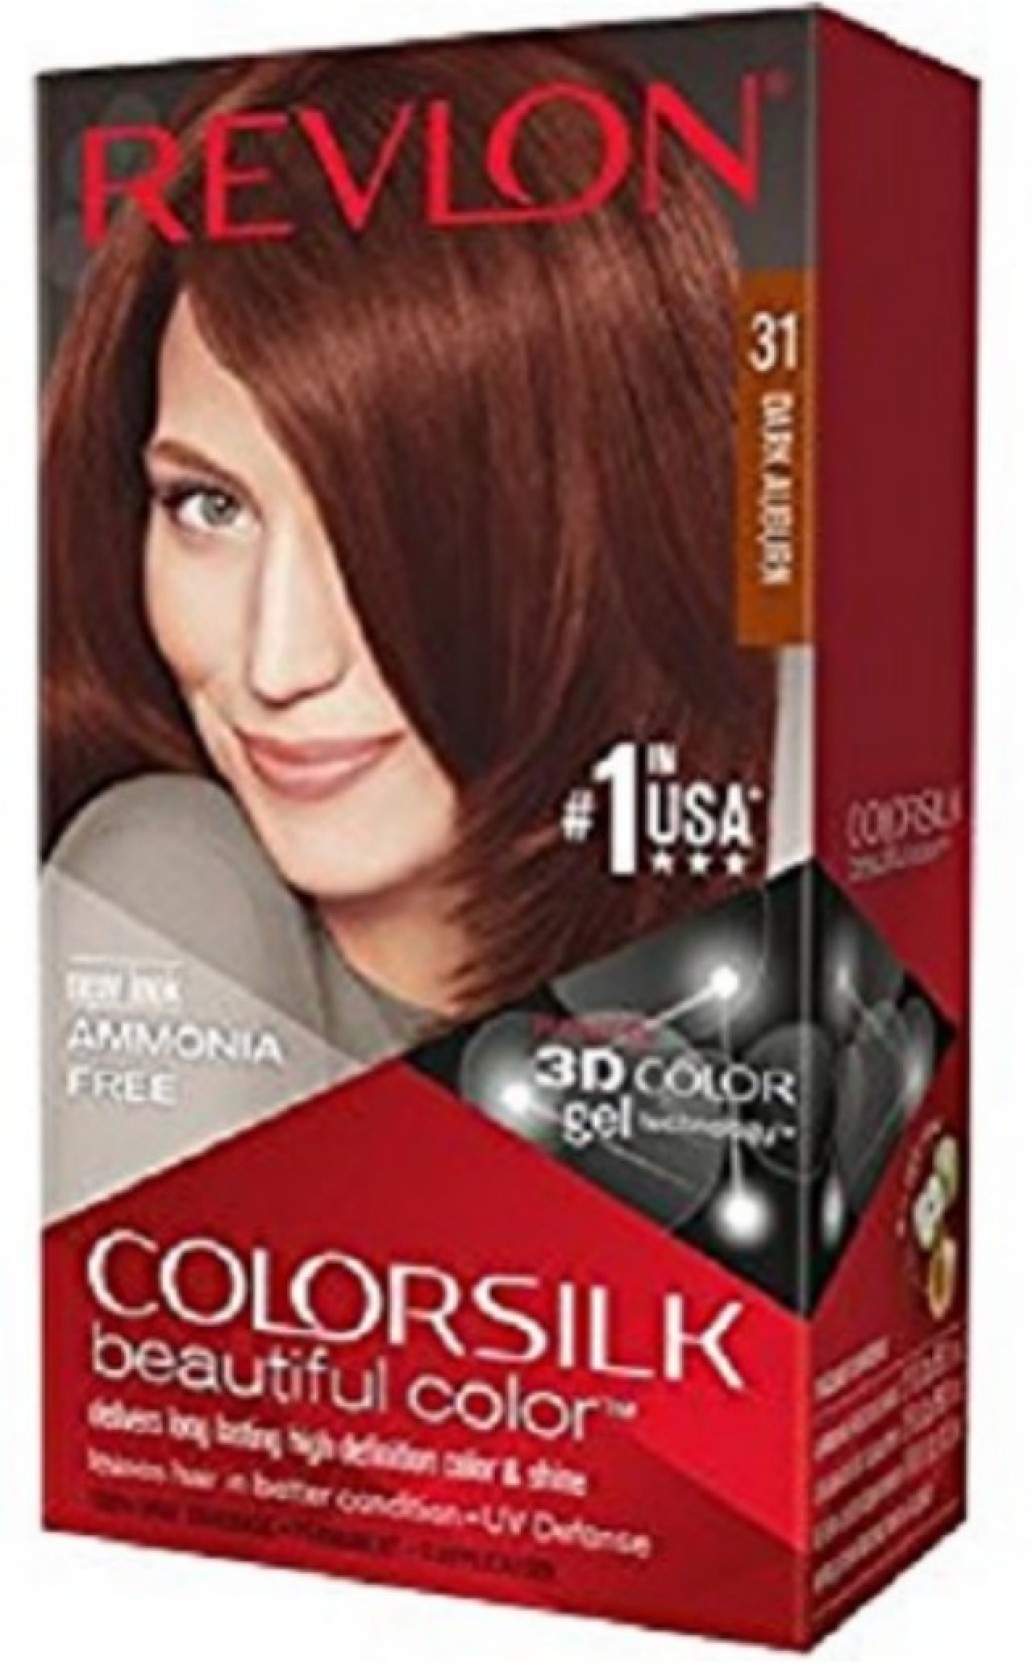 Revlon Colorsilk 3d Color Hair Color 3r Dark Auburn Hair